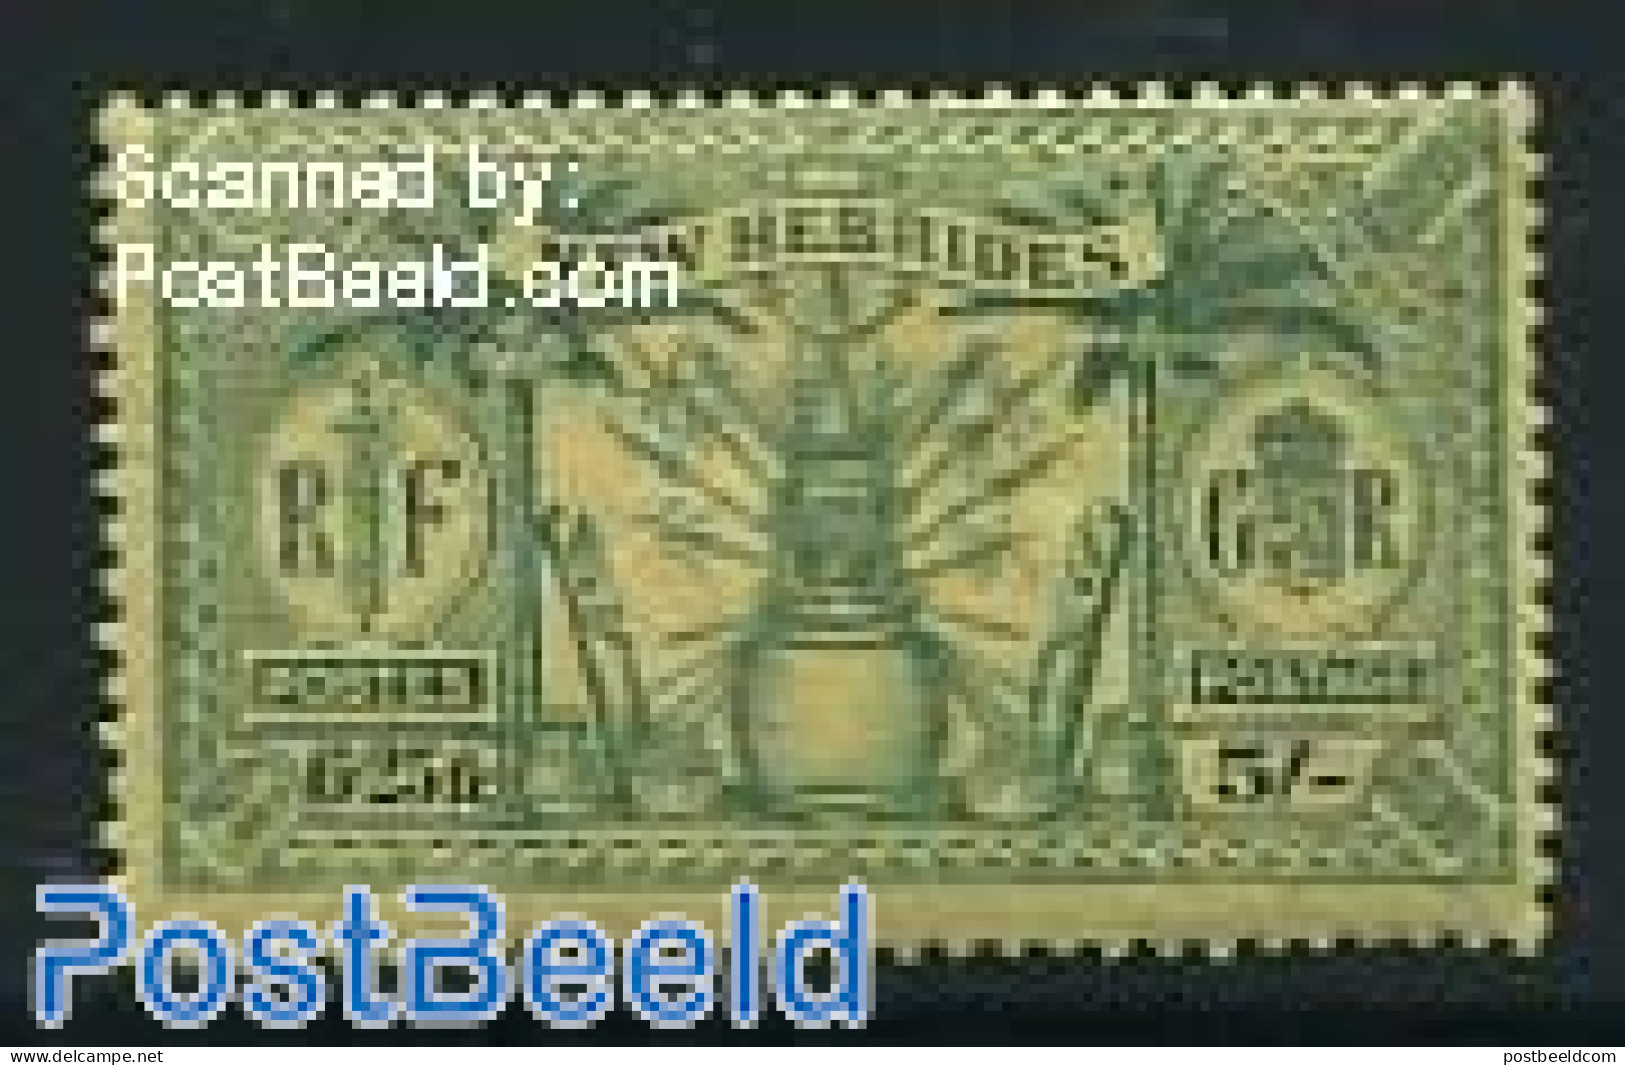 New Hebrides 1925 5Sh, Stamp Out Of Set, Unused (hinged) - Unused Stamps